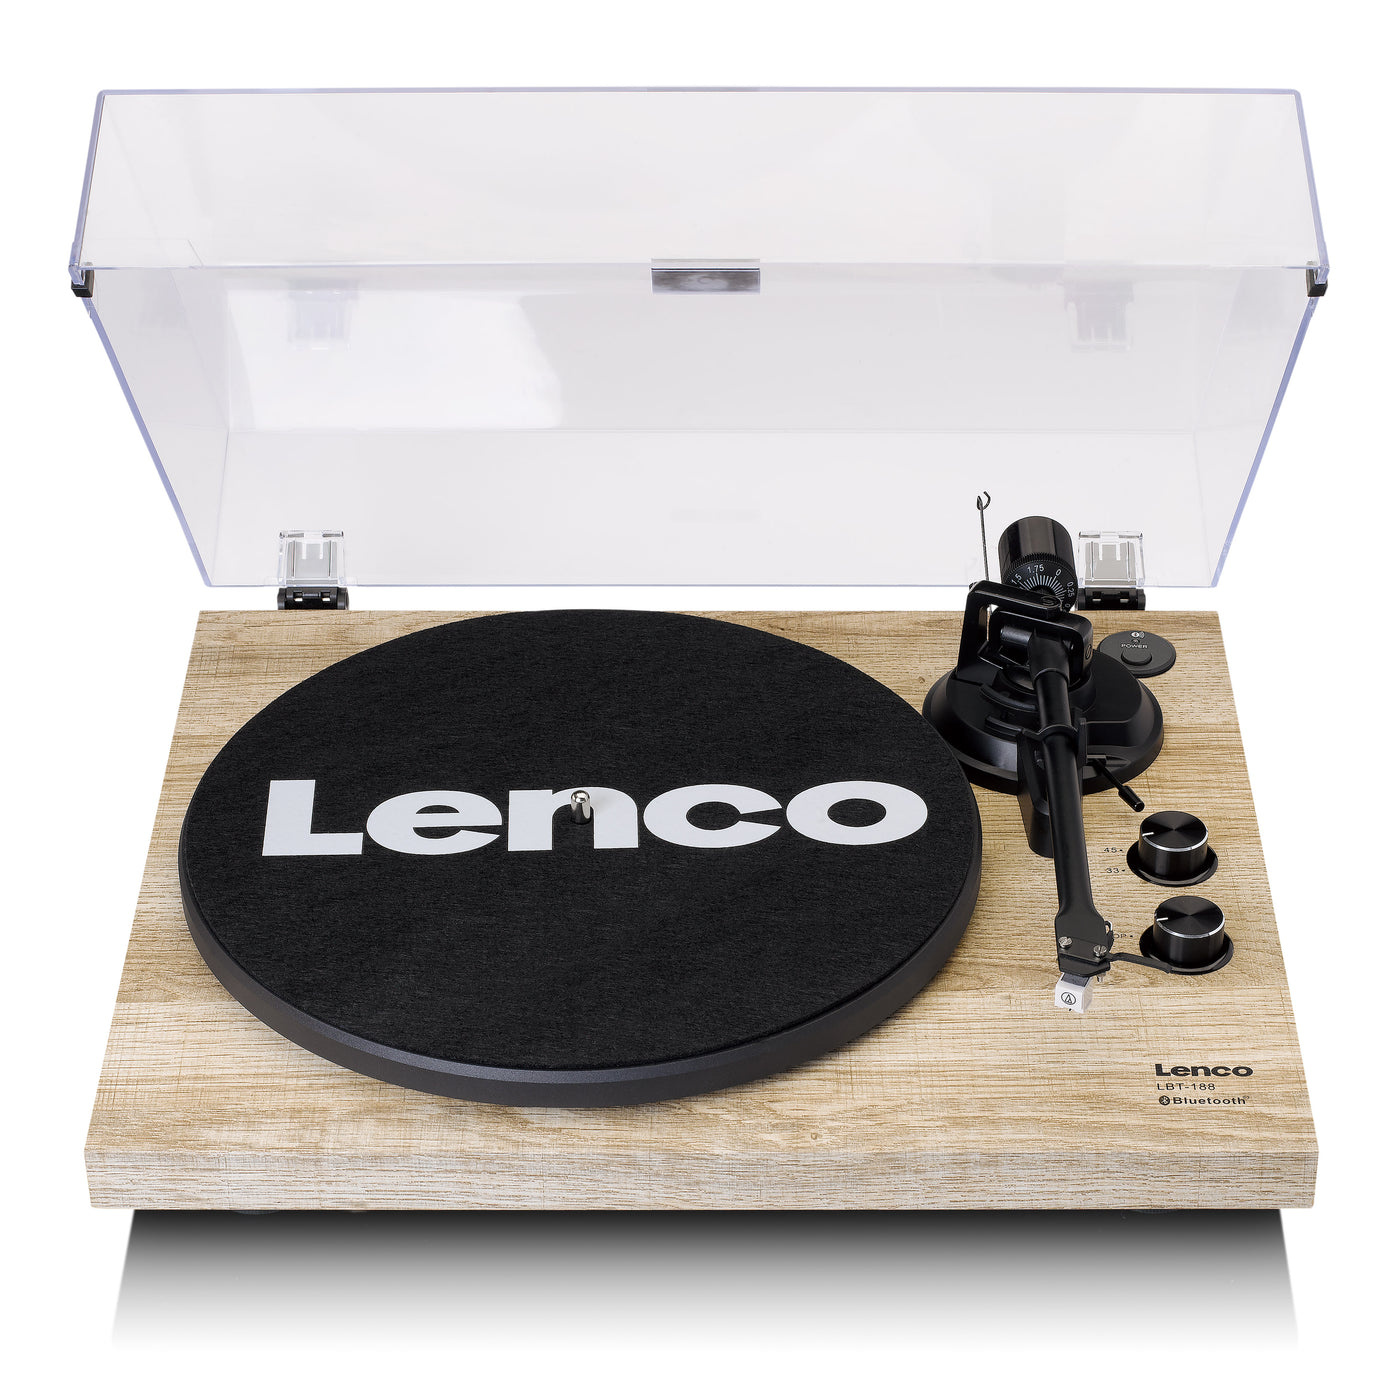 LENCO LBT-188PI - Record Player with Bluetooth® transmission, wood